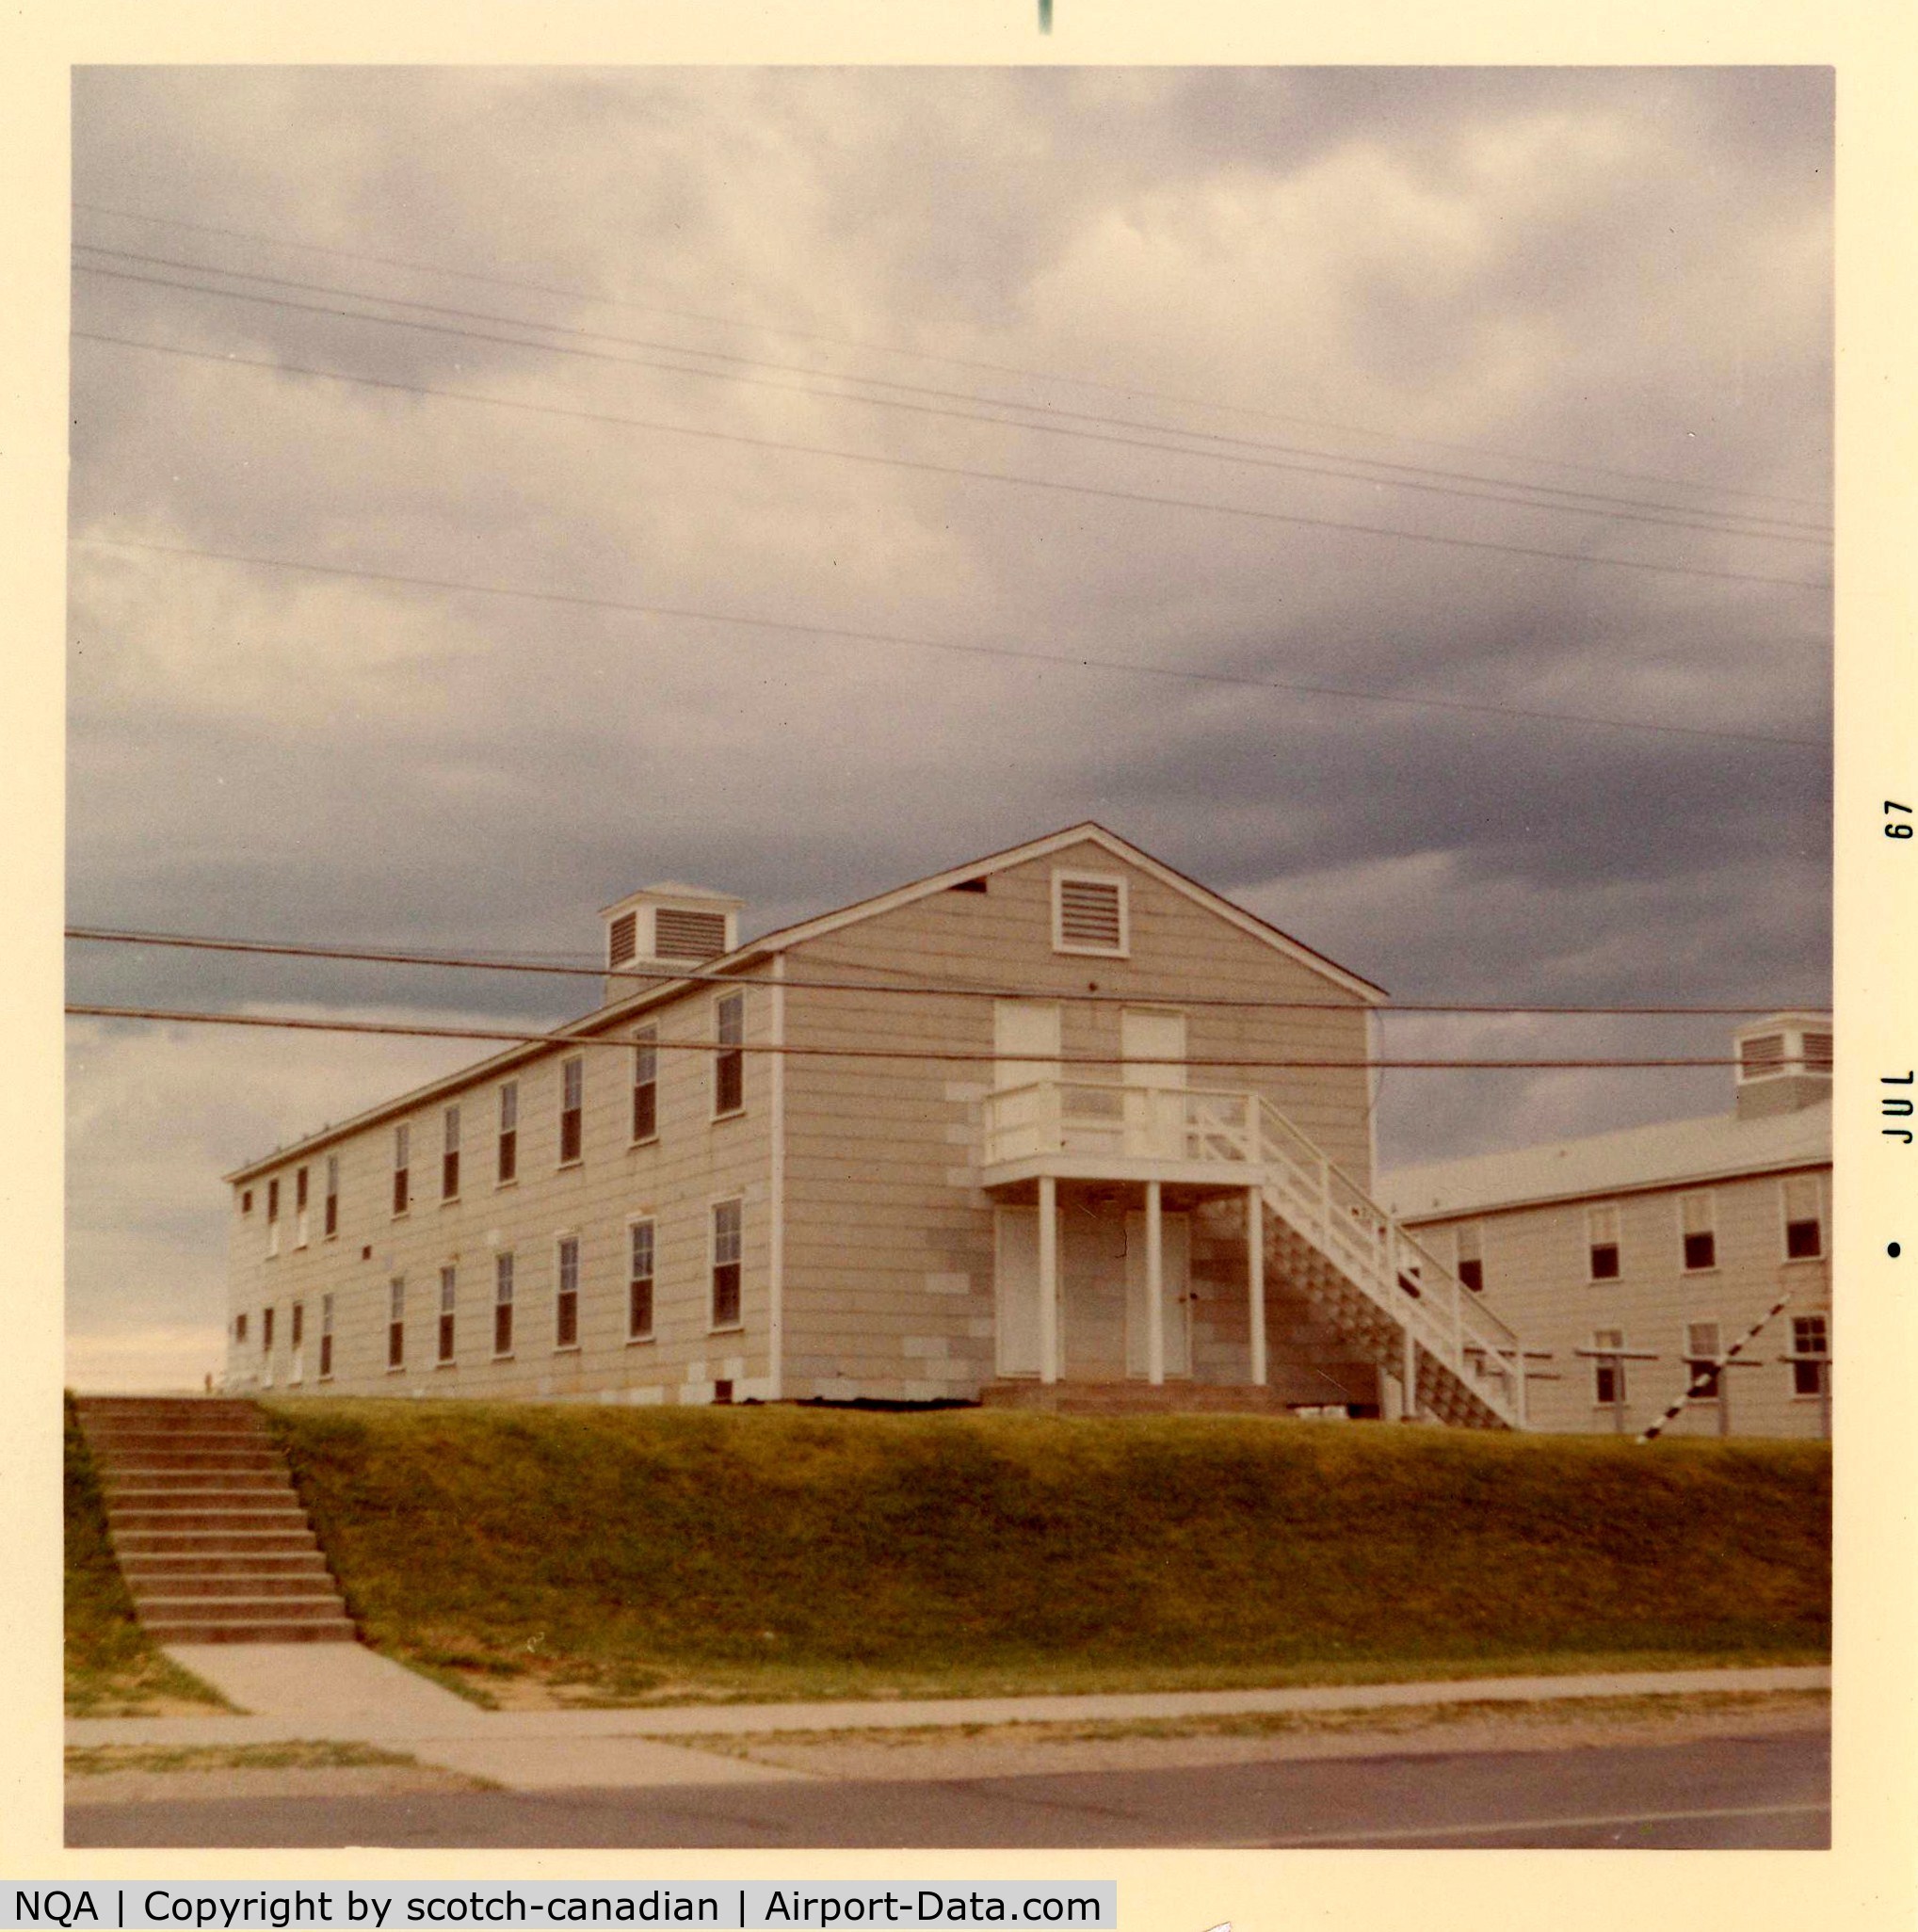 Millington Regional Jetport Airport (NQA) - Barracks at Recruit Training Unit, Naval Air Station - Memphis, Millington, TN - 1967